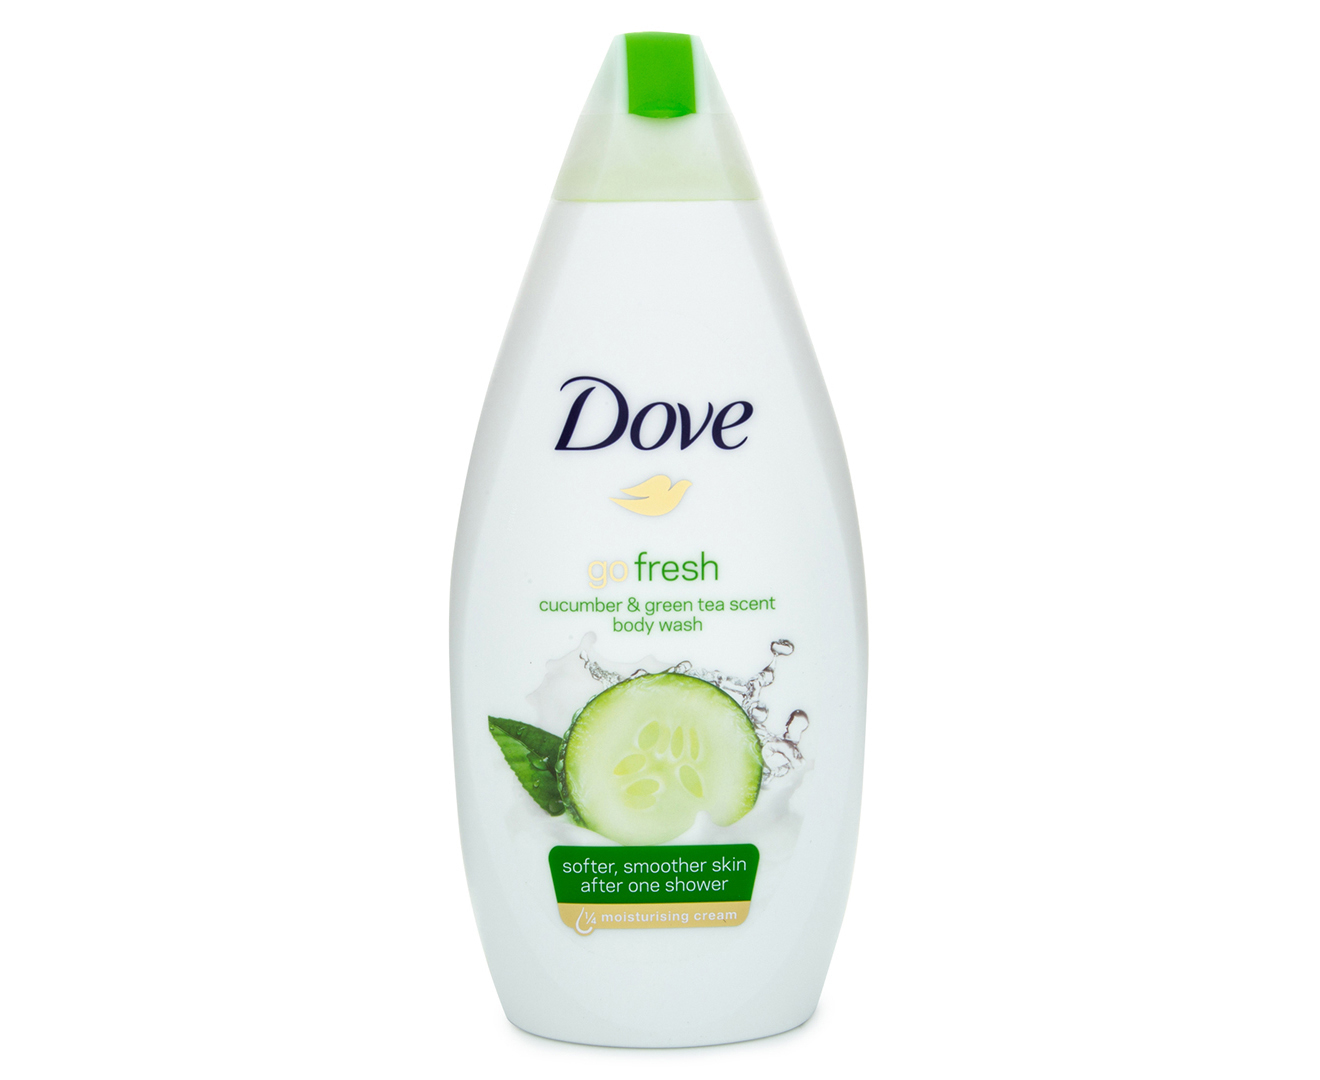 dove go fresh body wash